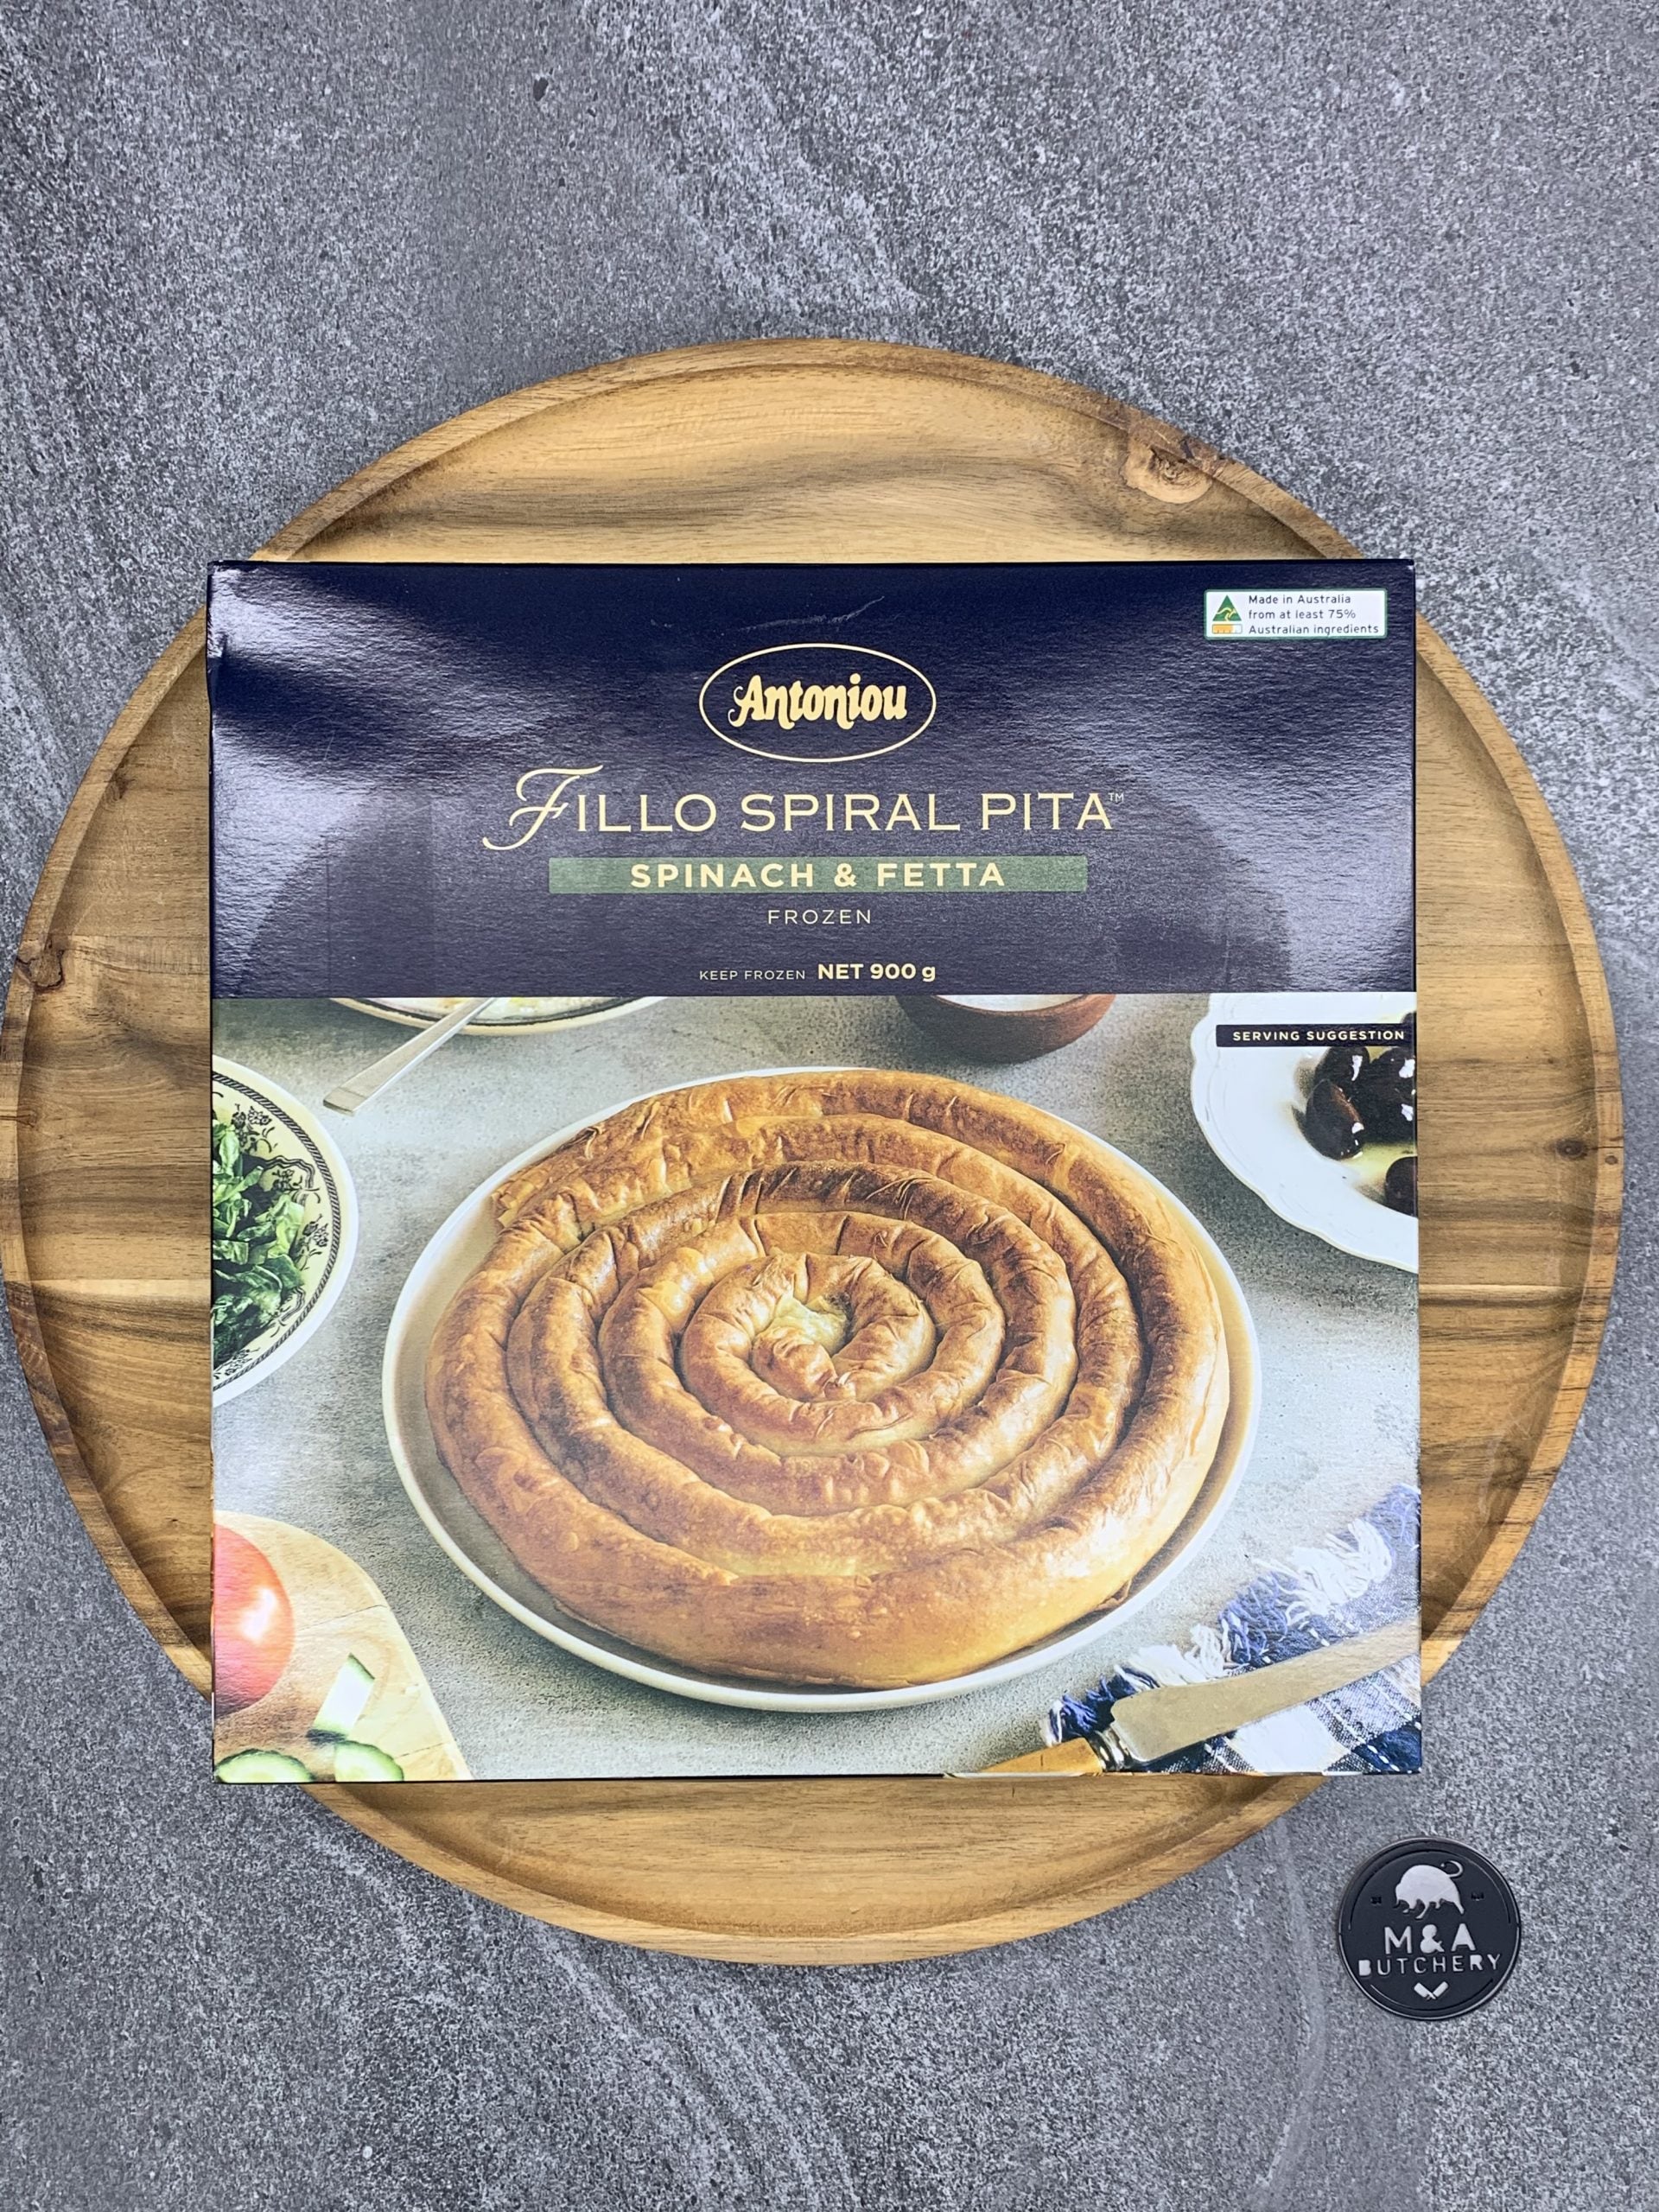 Antoniou Family sized Spinach & Feta Spirals – 900g